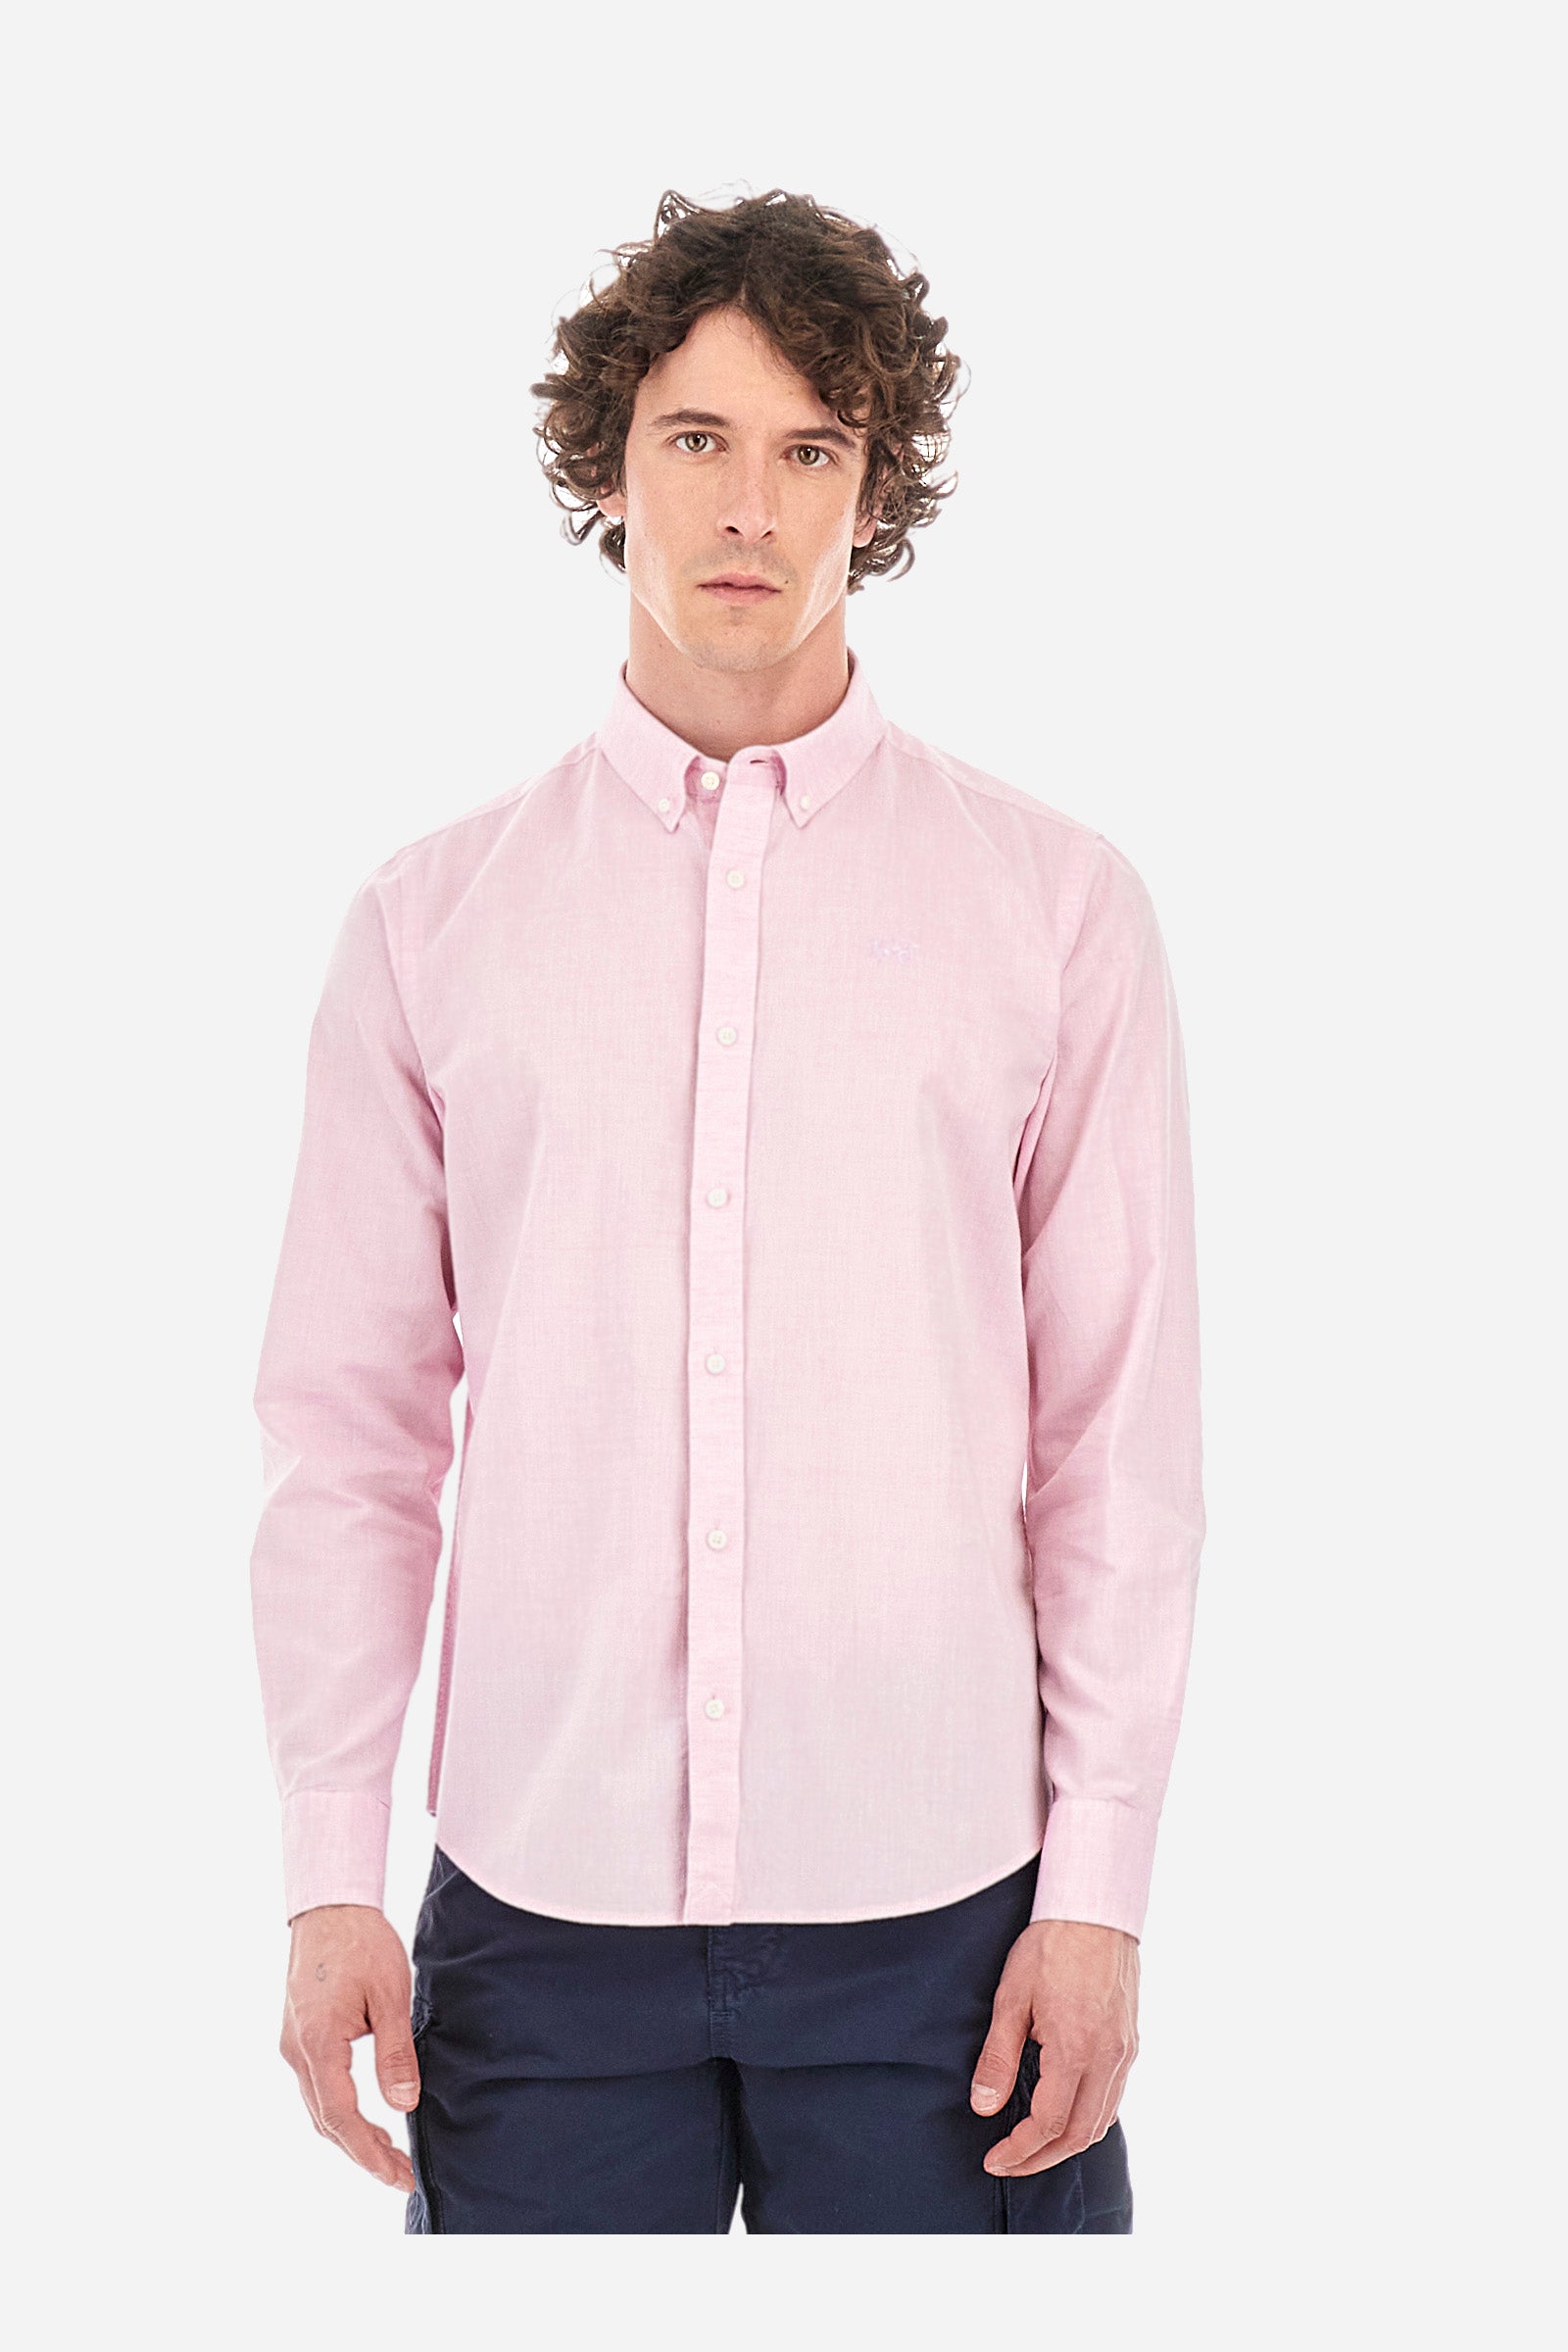 Men's regular-fit shirt in cotton and linen - Alvin